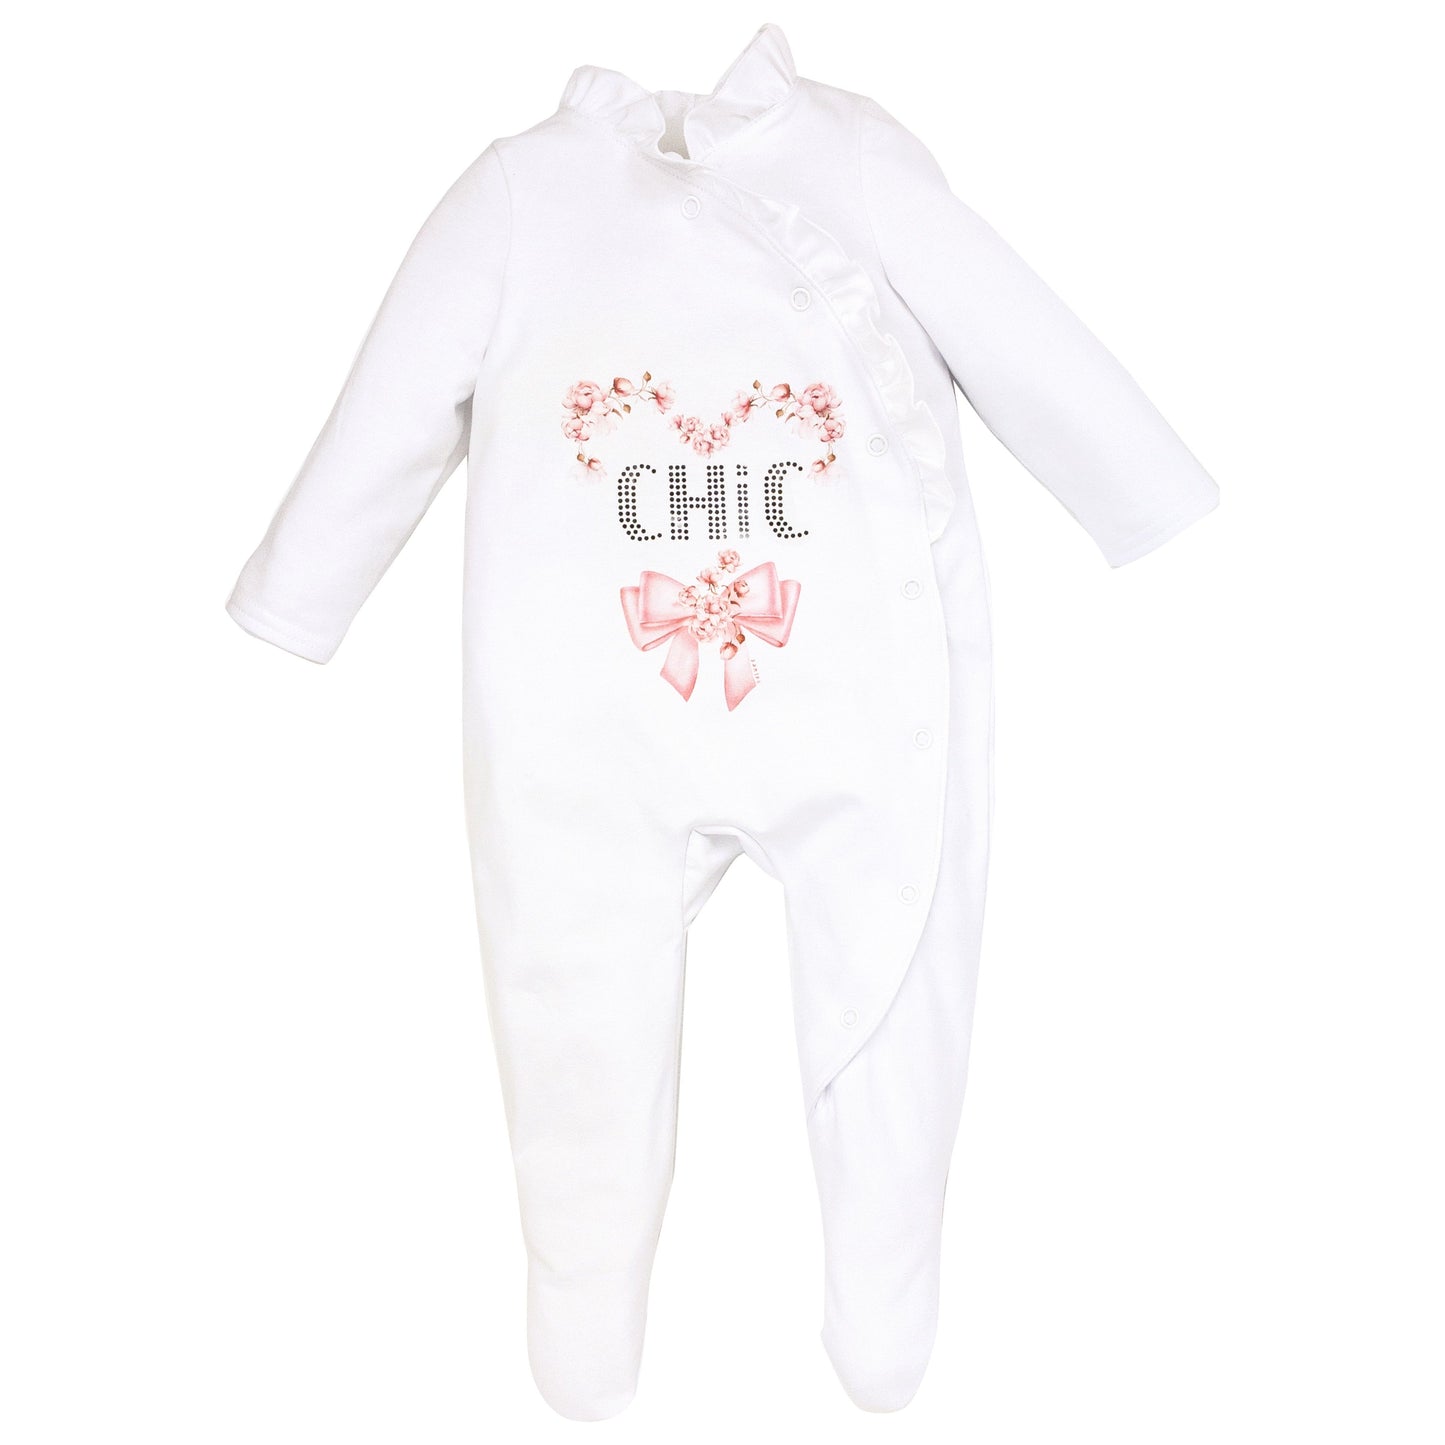 Baby girls white cotton baby grow - Adora Childrenswear